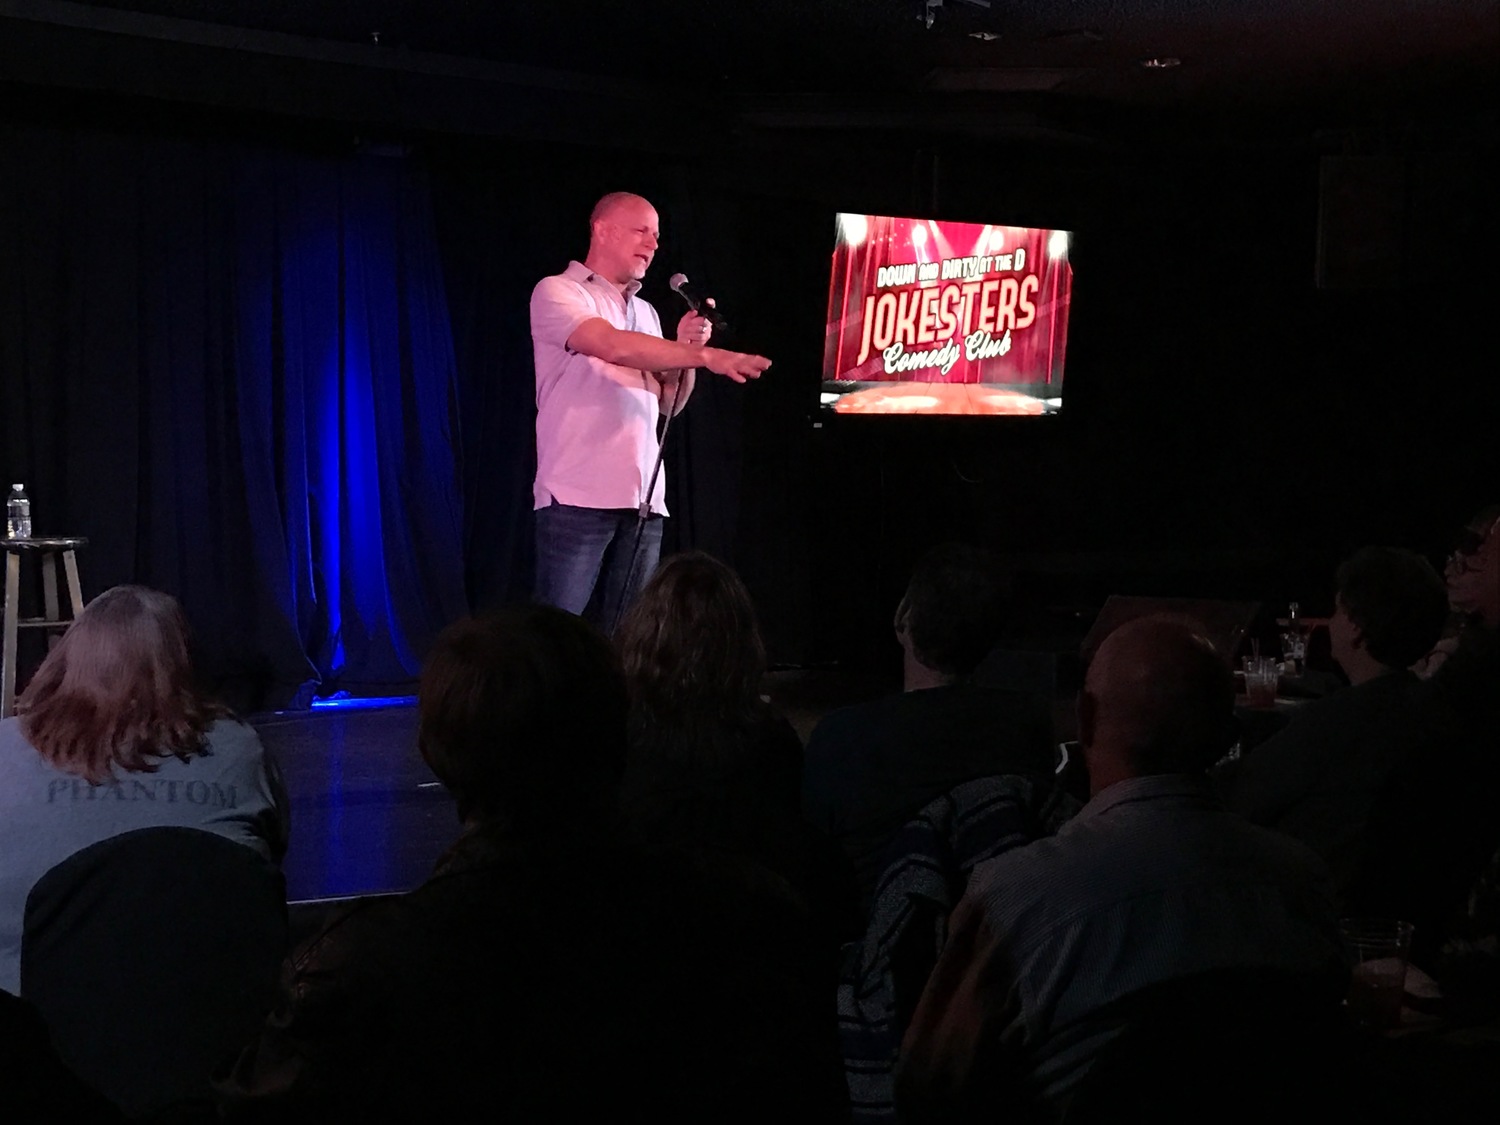 Don Barnhart headlining nightly when he's not on tour. Jokesters Comedy Club Las Vegas